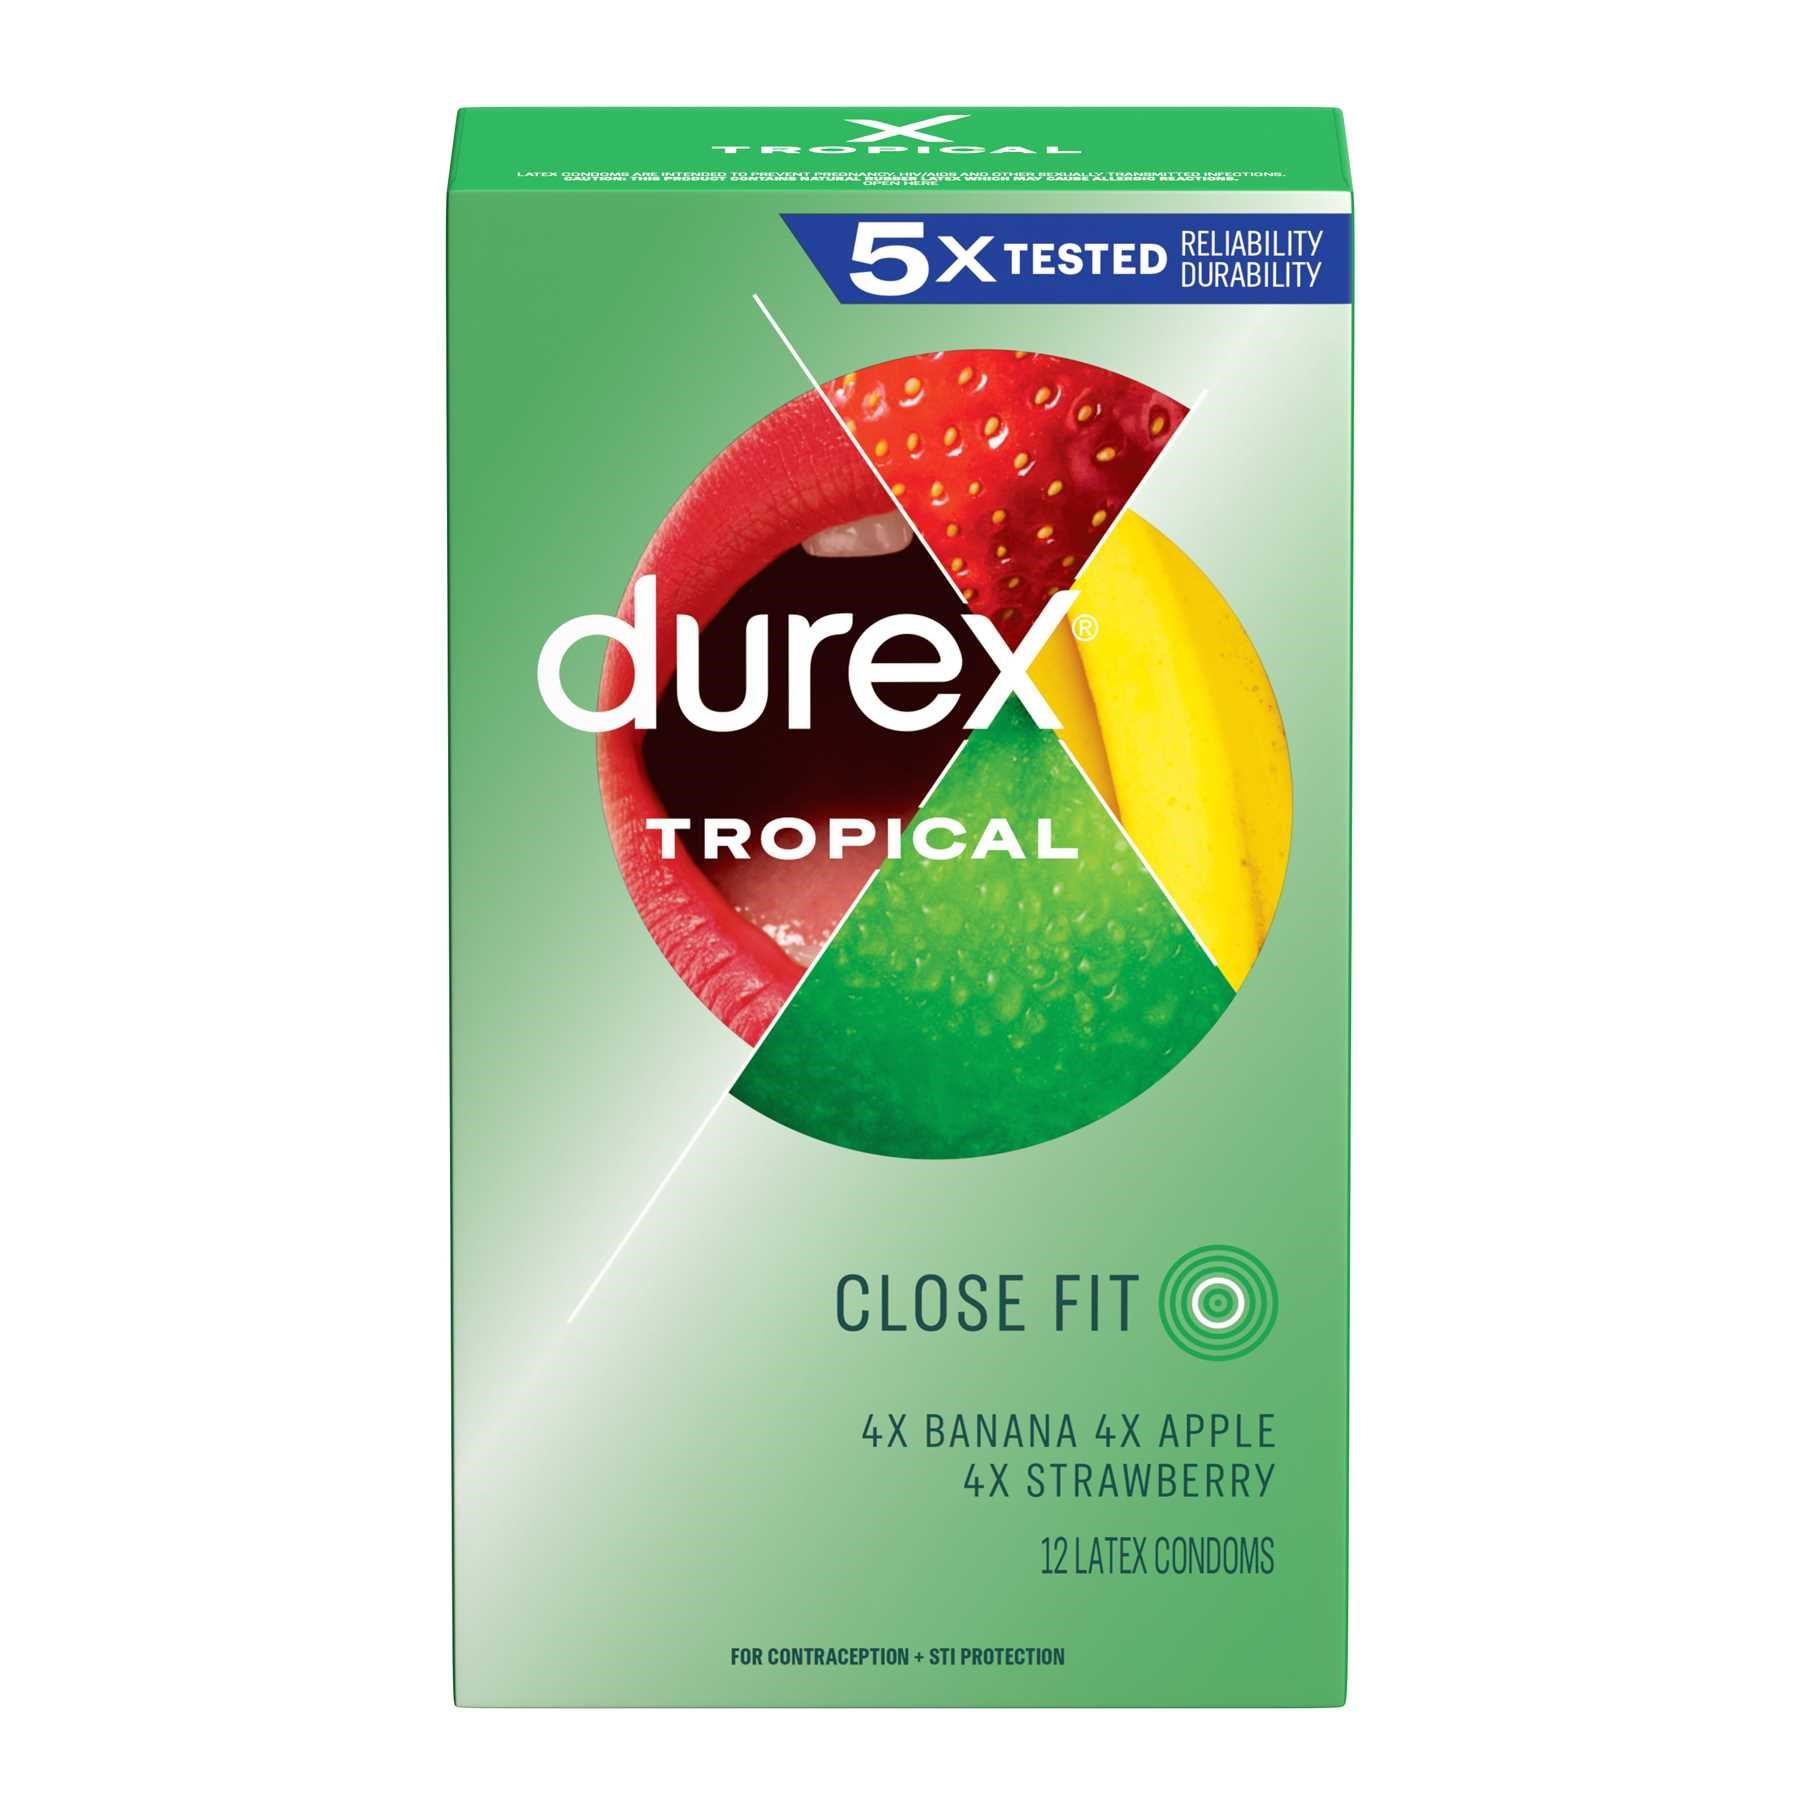 Durex Tropical Flavors Condom front box